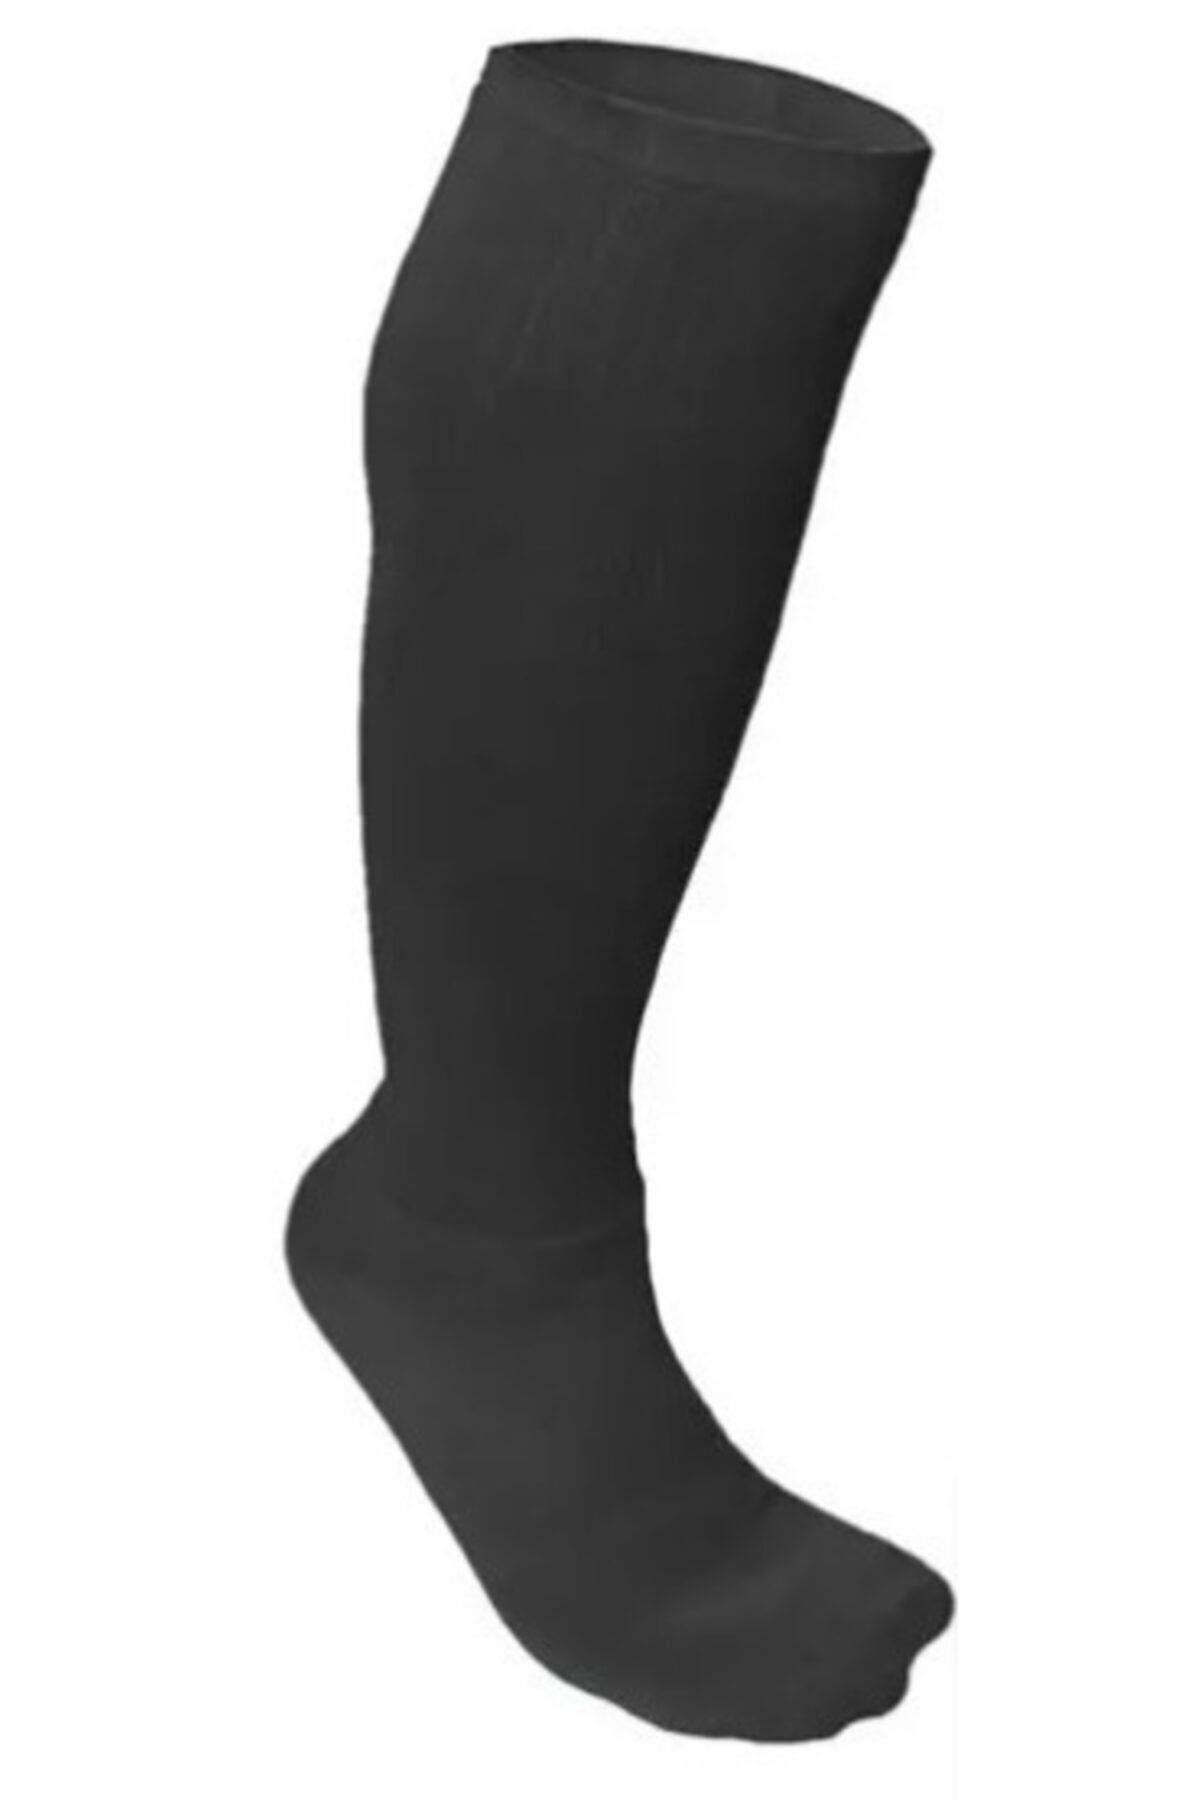 SCHMILTON Lüks Futbol Çorabı 6 Çift - Siyah Renk- Konç - Tozluk